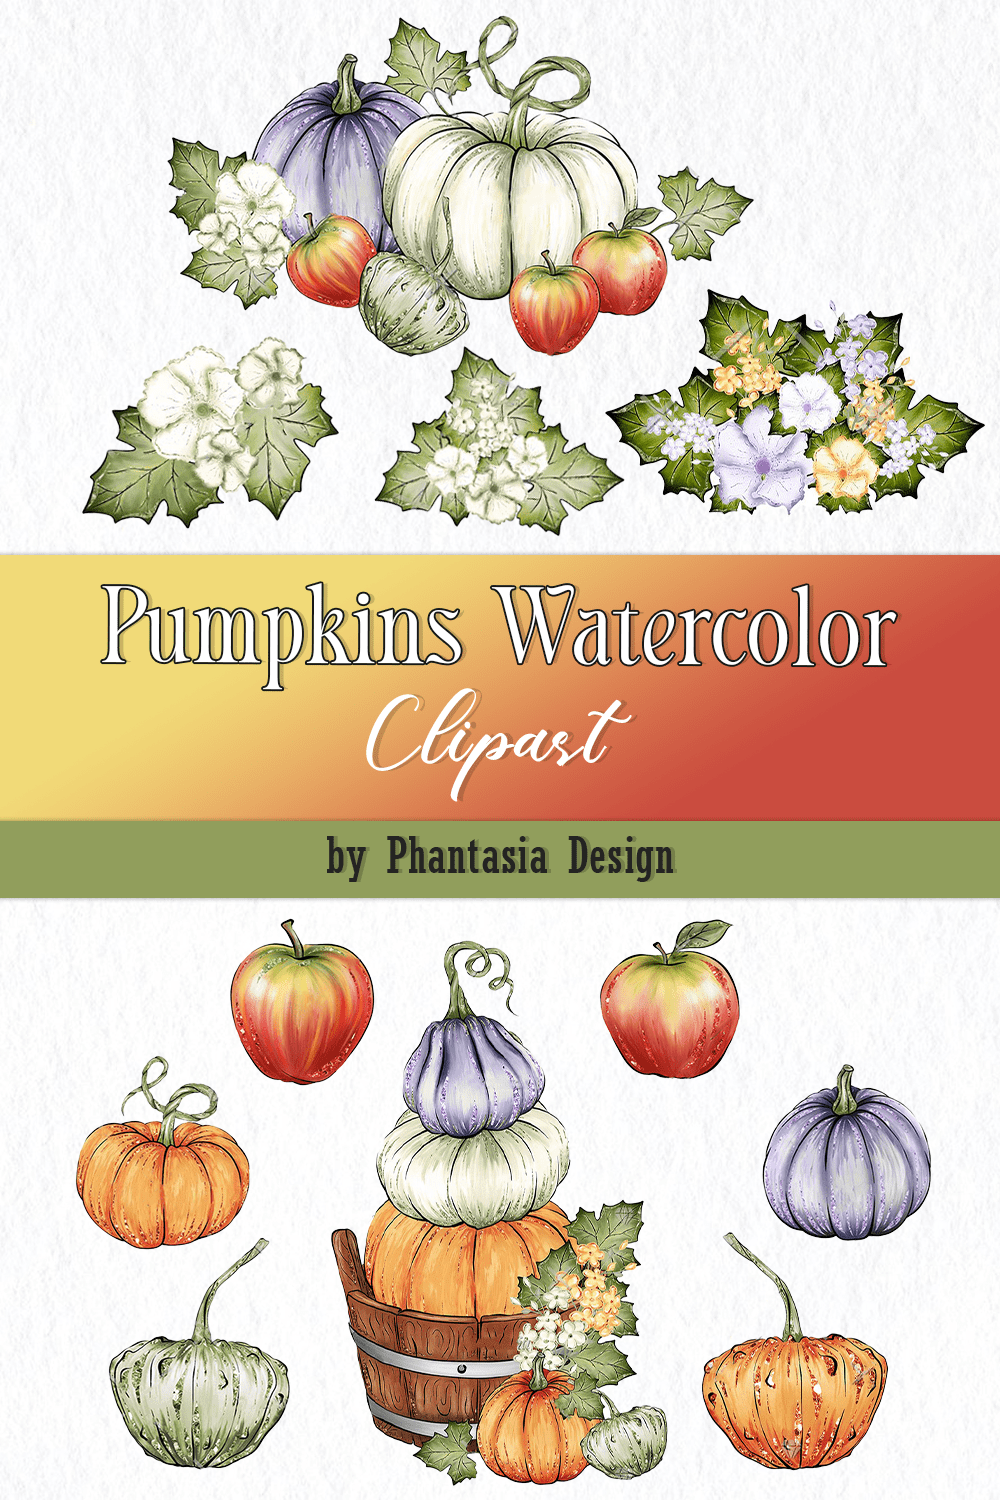 pumpkins watercolor clipart pinterest